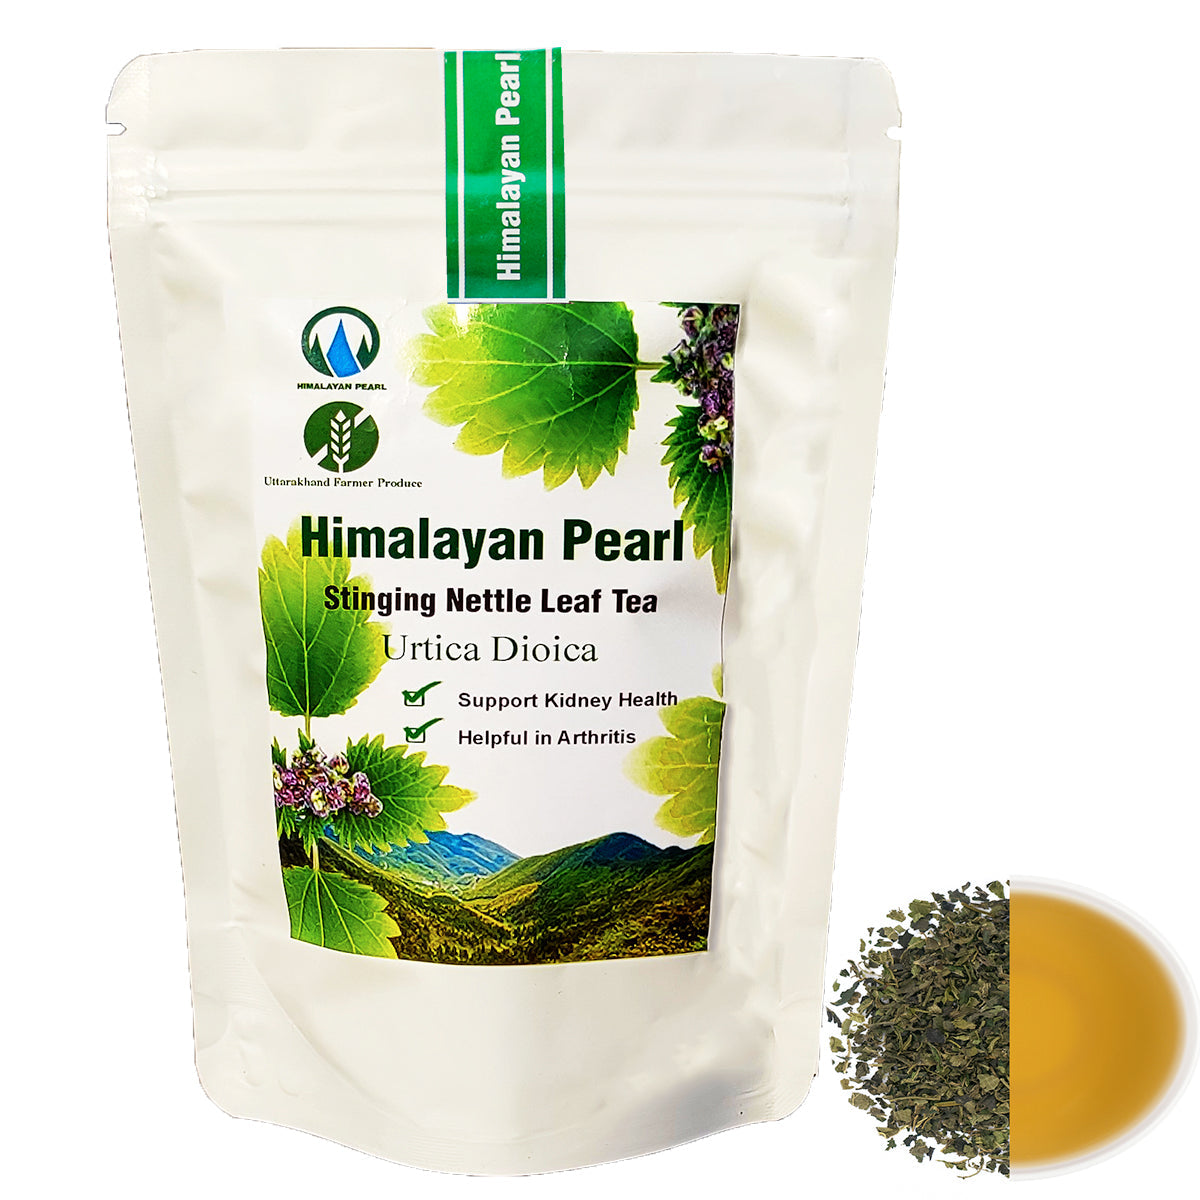 Himalayan high Medicinal Nettle leaf Tea by Himalayan Pearl - hfnl!fe